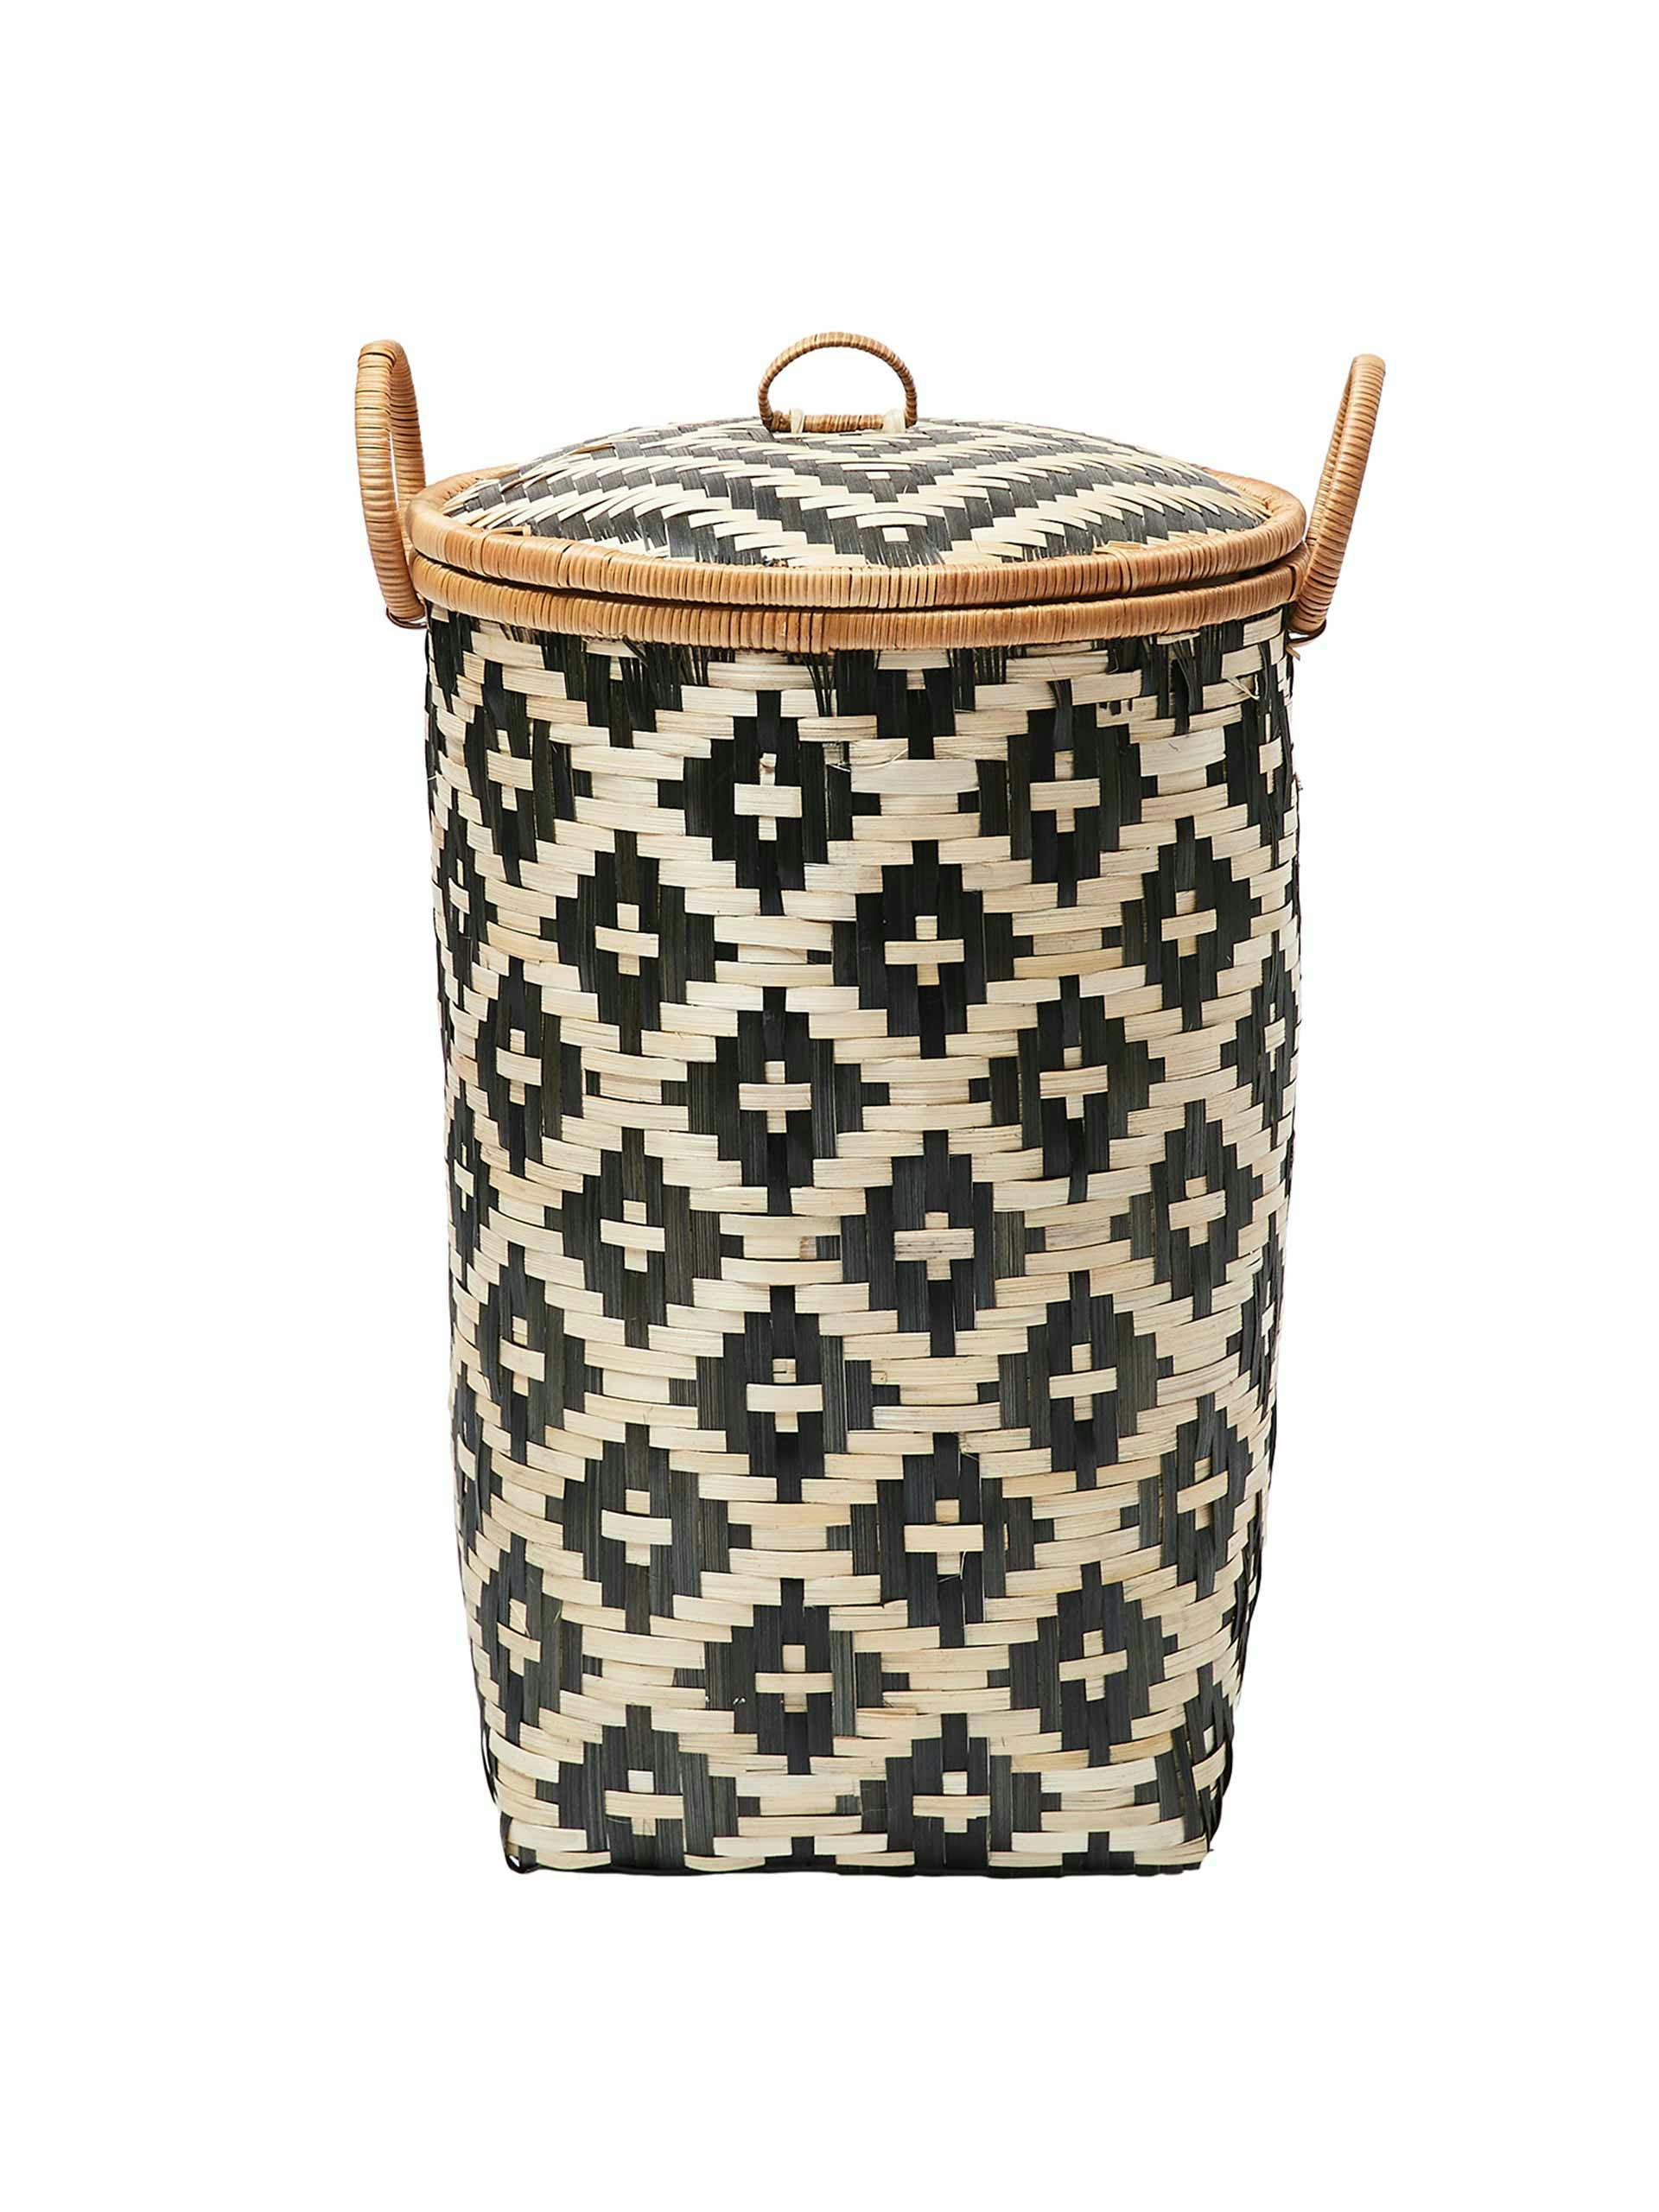 Woven black bamboo laundry basket